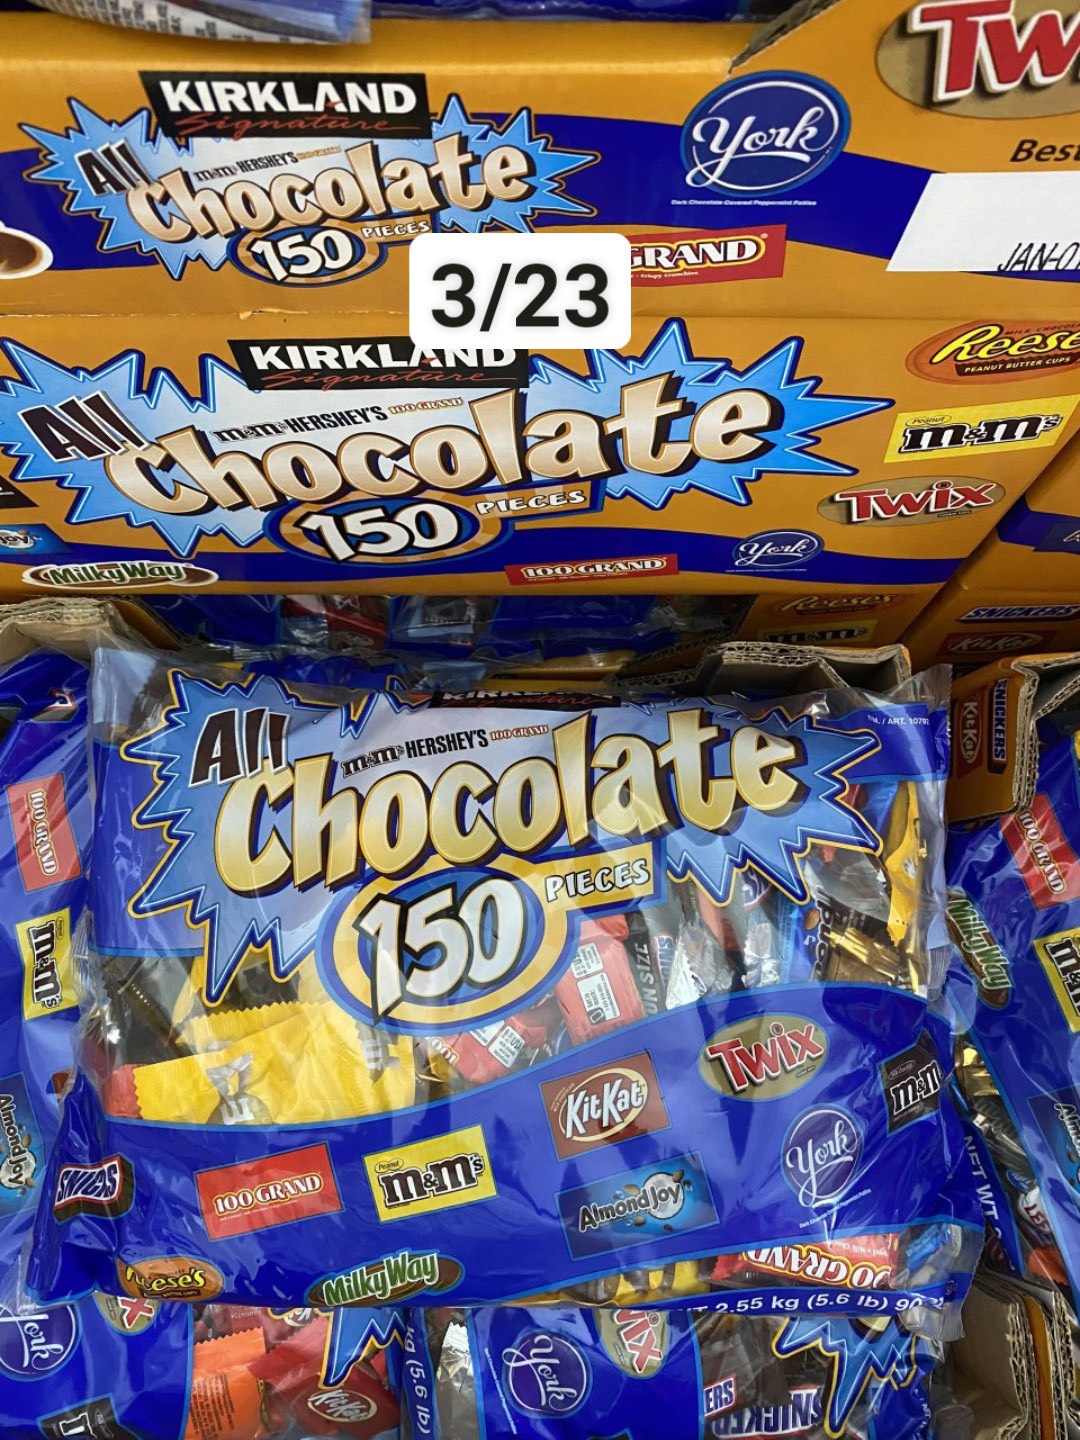 Kẹo All Chocolate 150 Pieces Kirkland Signature